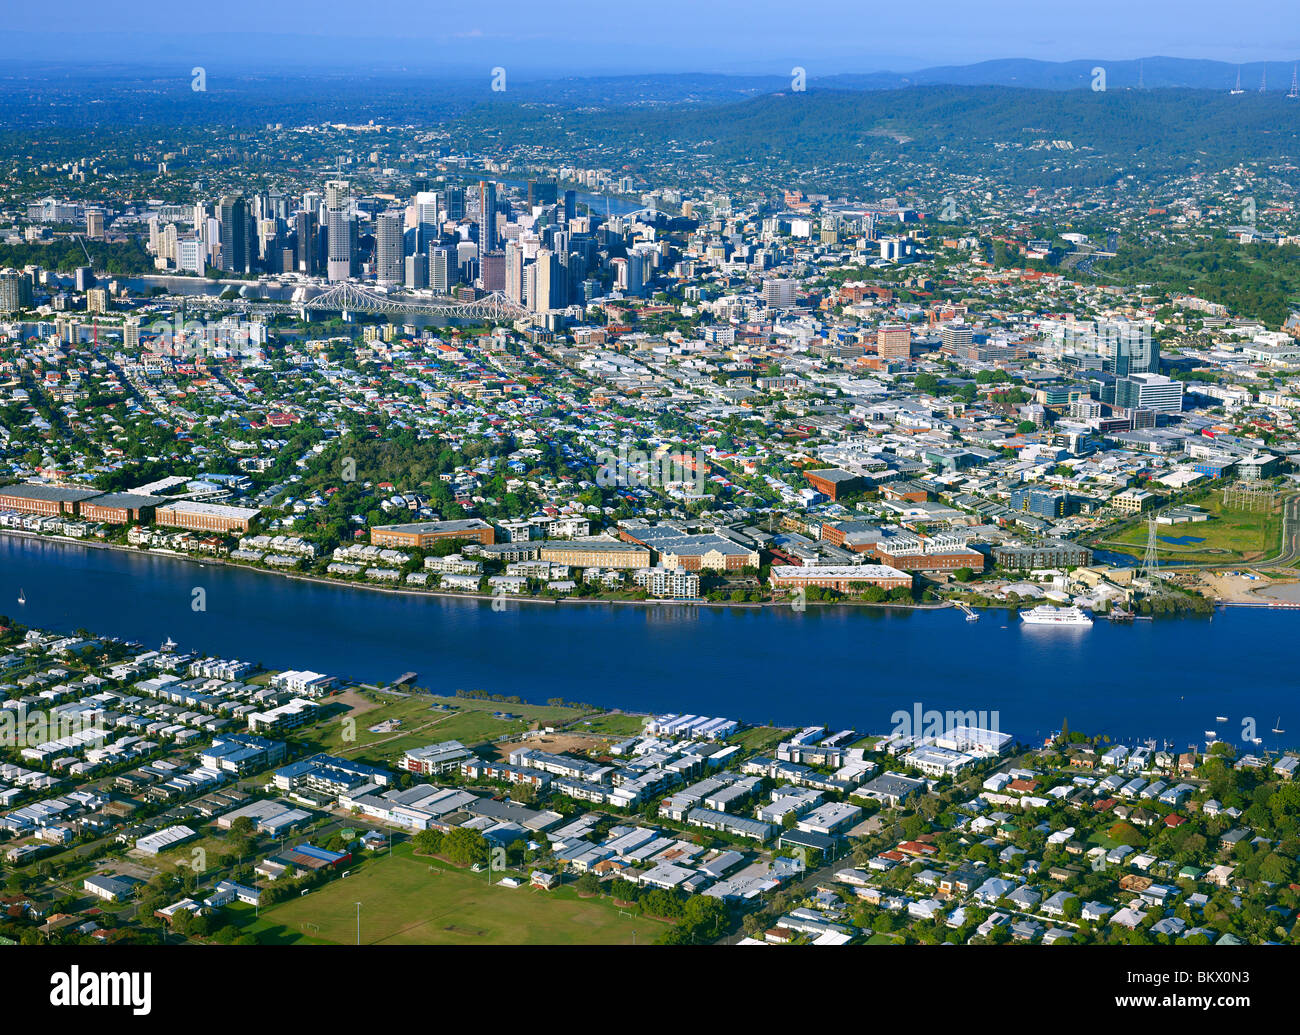 Vista aérea de Brisbane, Queensland, Australia mirando al oeste de Bulimba Foto de stock